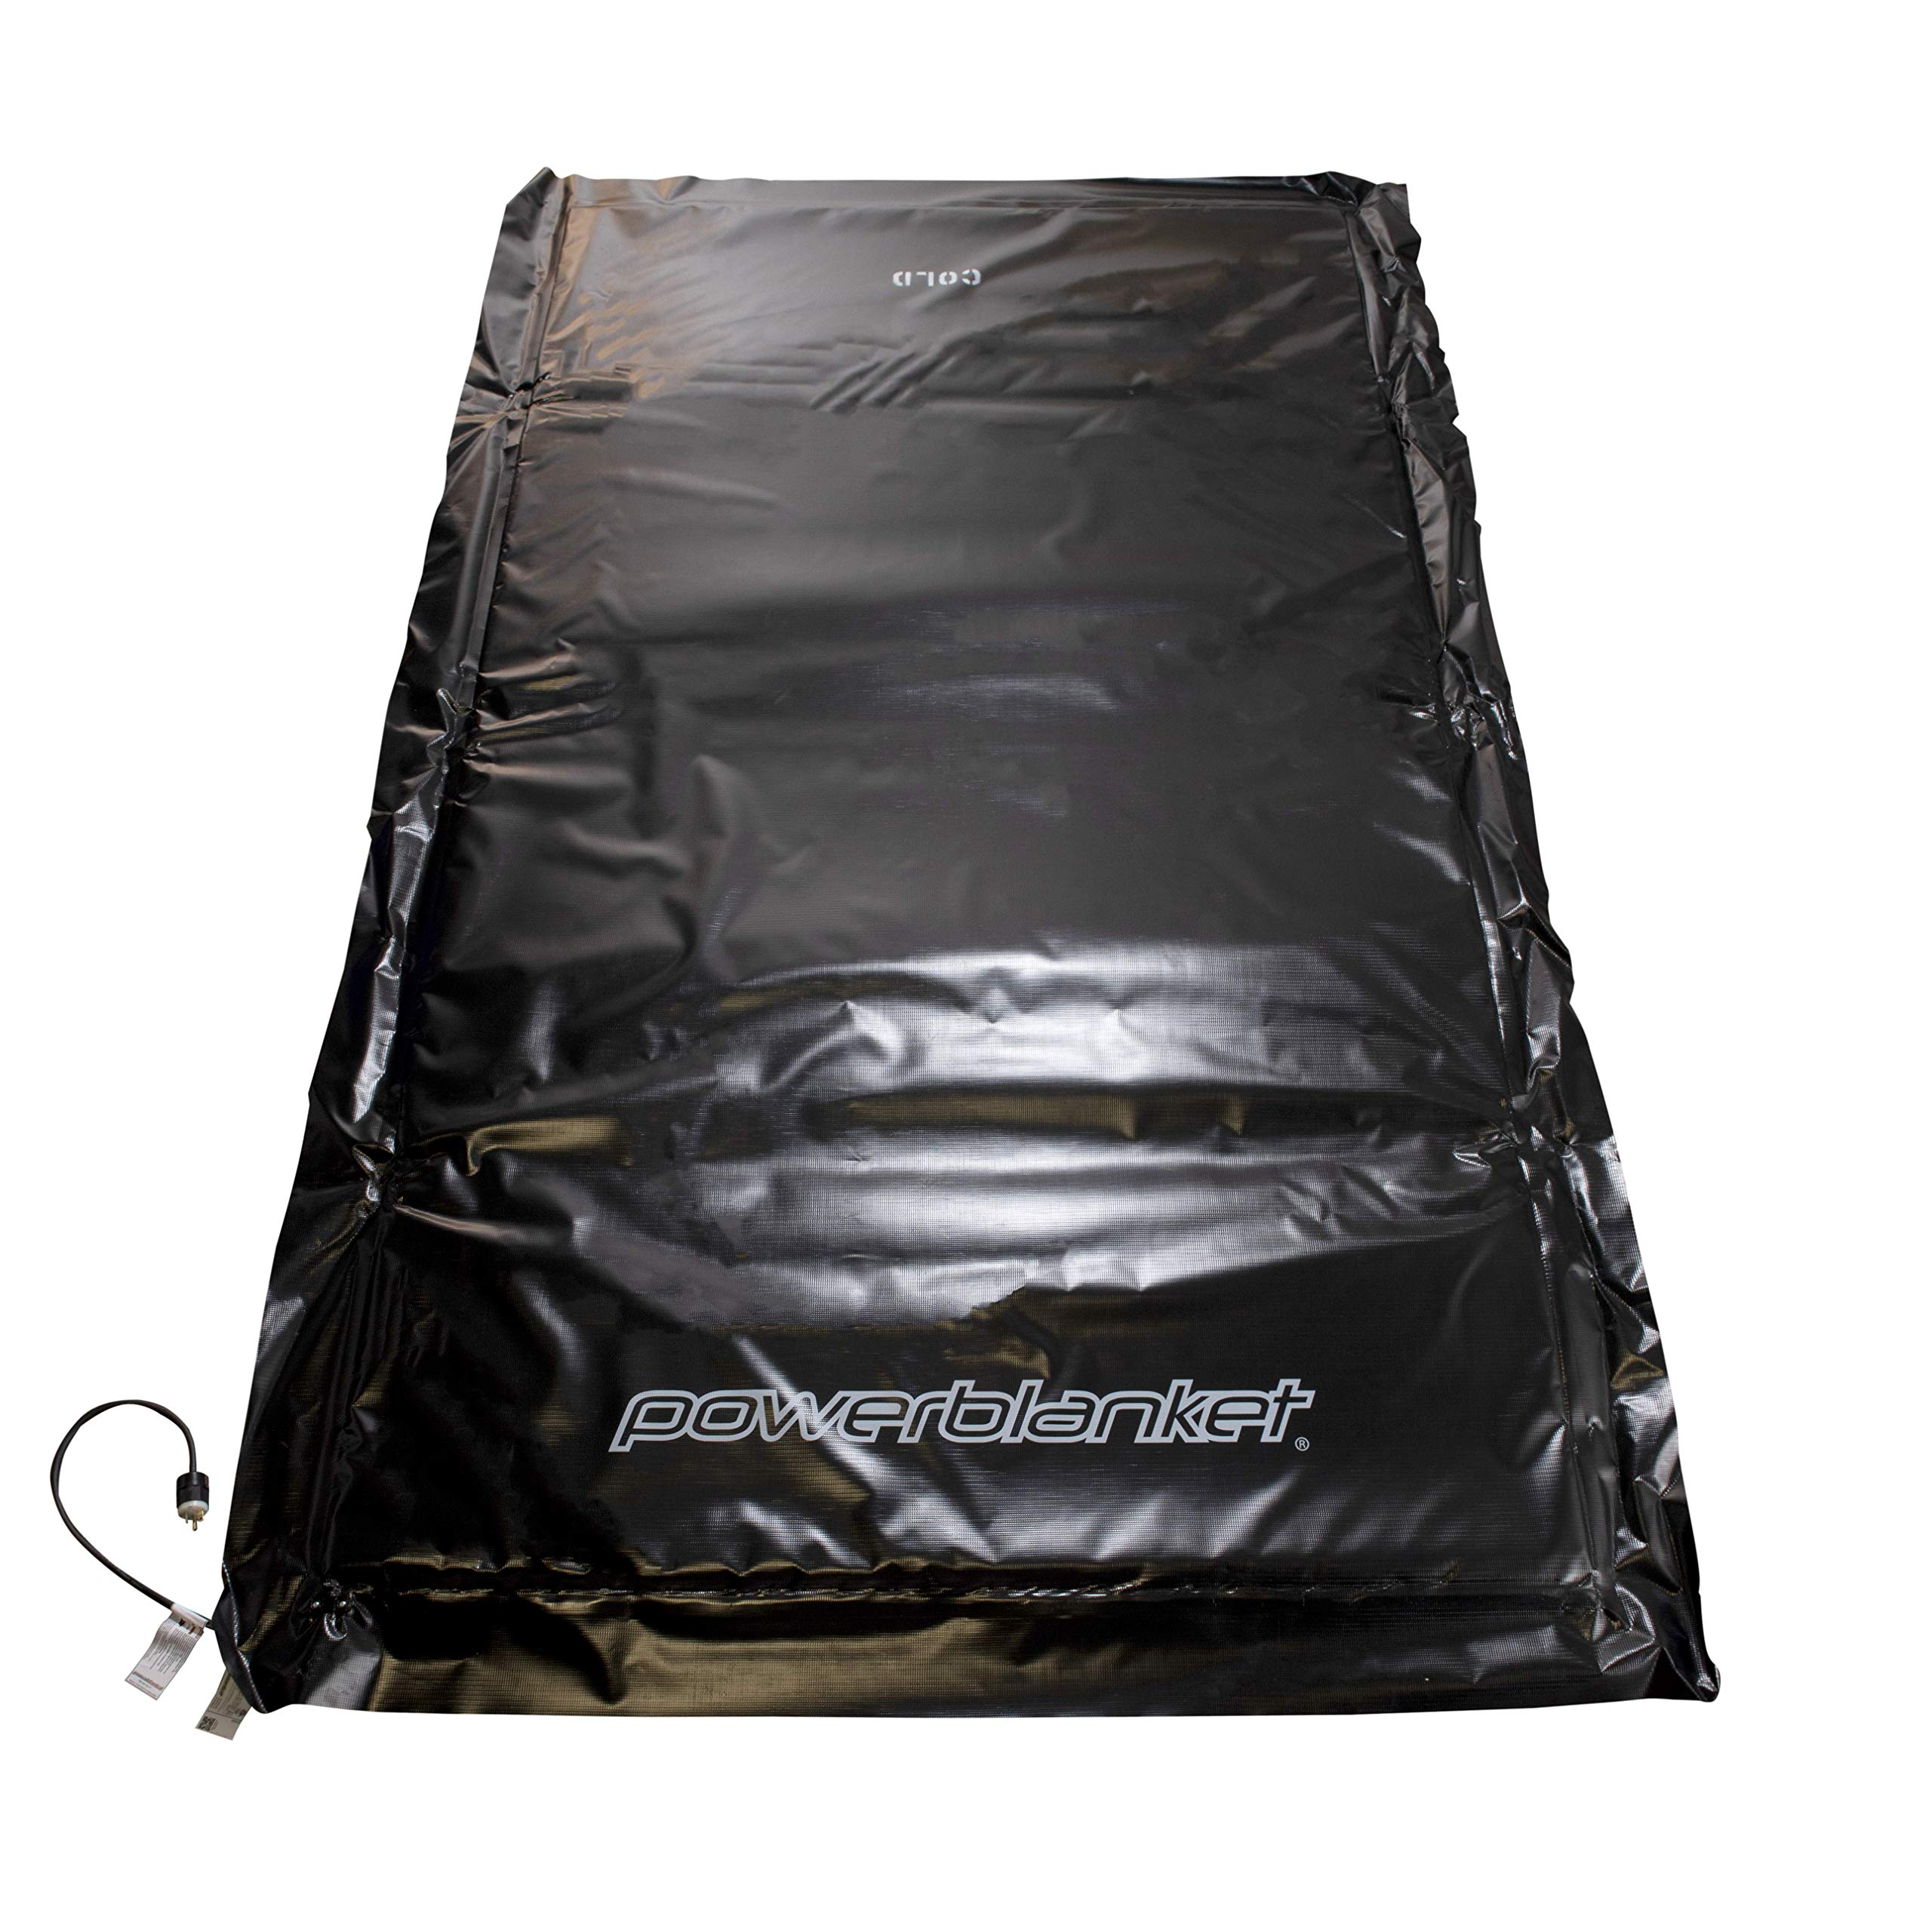 Powerblanket EH0304 地面解冻毯 - 3' x 4' 加热尺寸 - 4' x 5' 成品尺寸